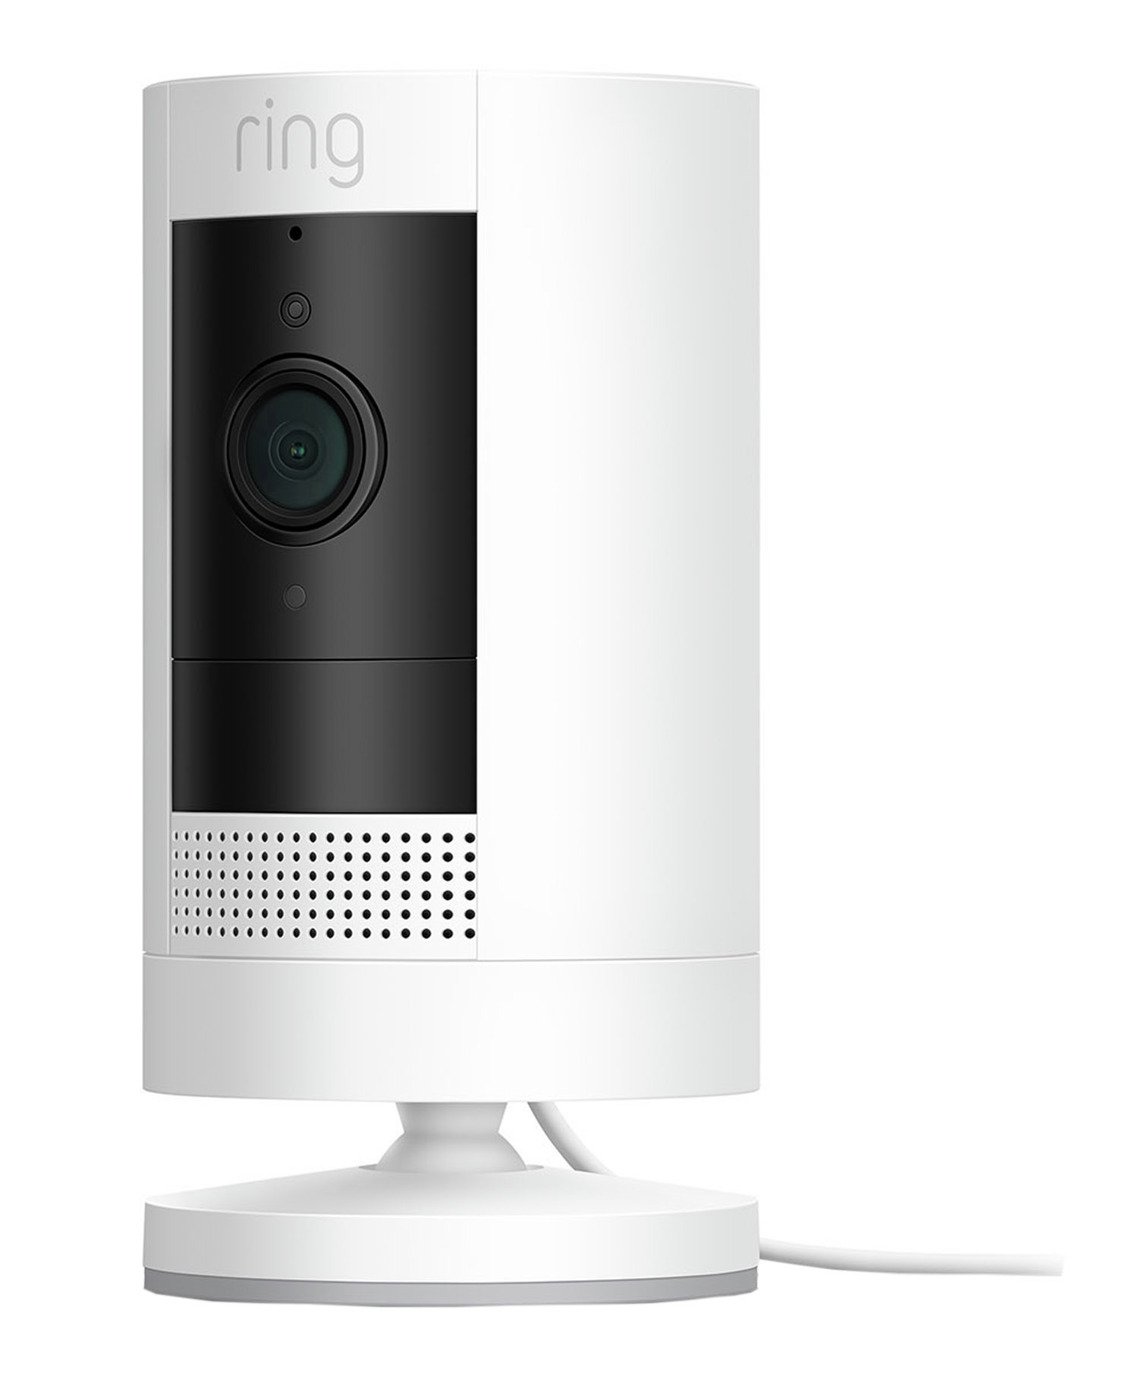 Ring Stick Up Cam Plug-In Security Camera CCTV - White